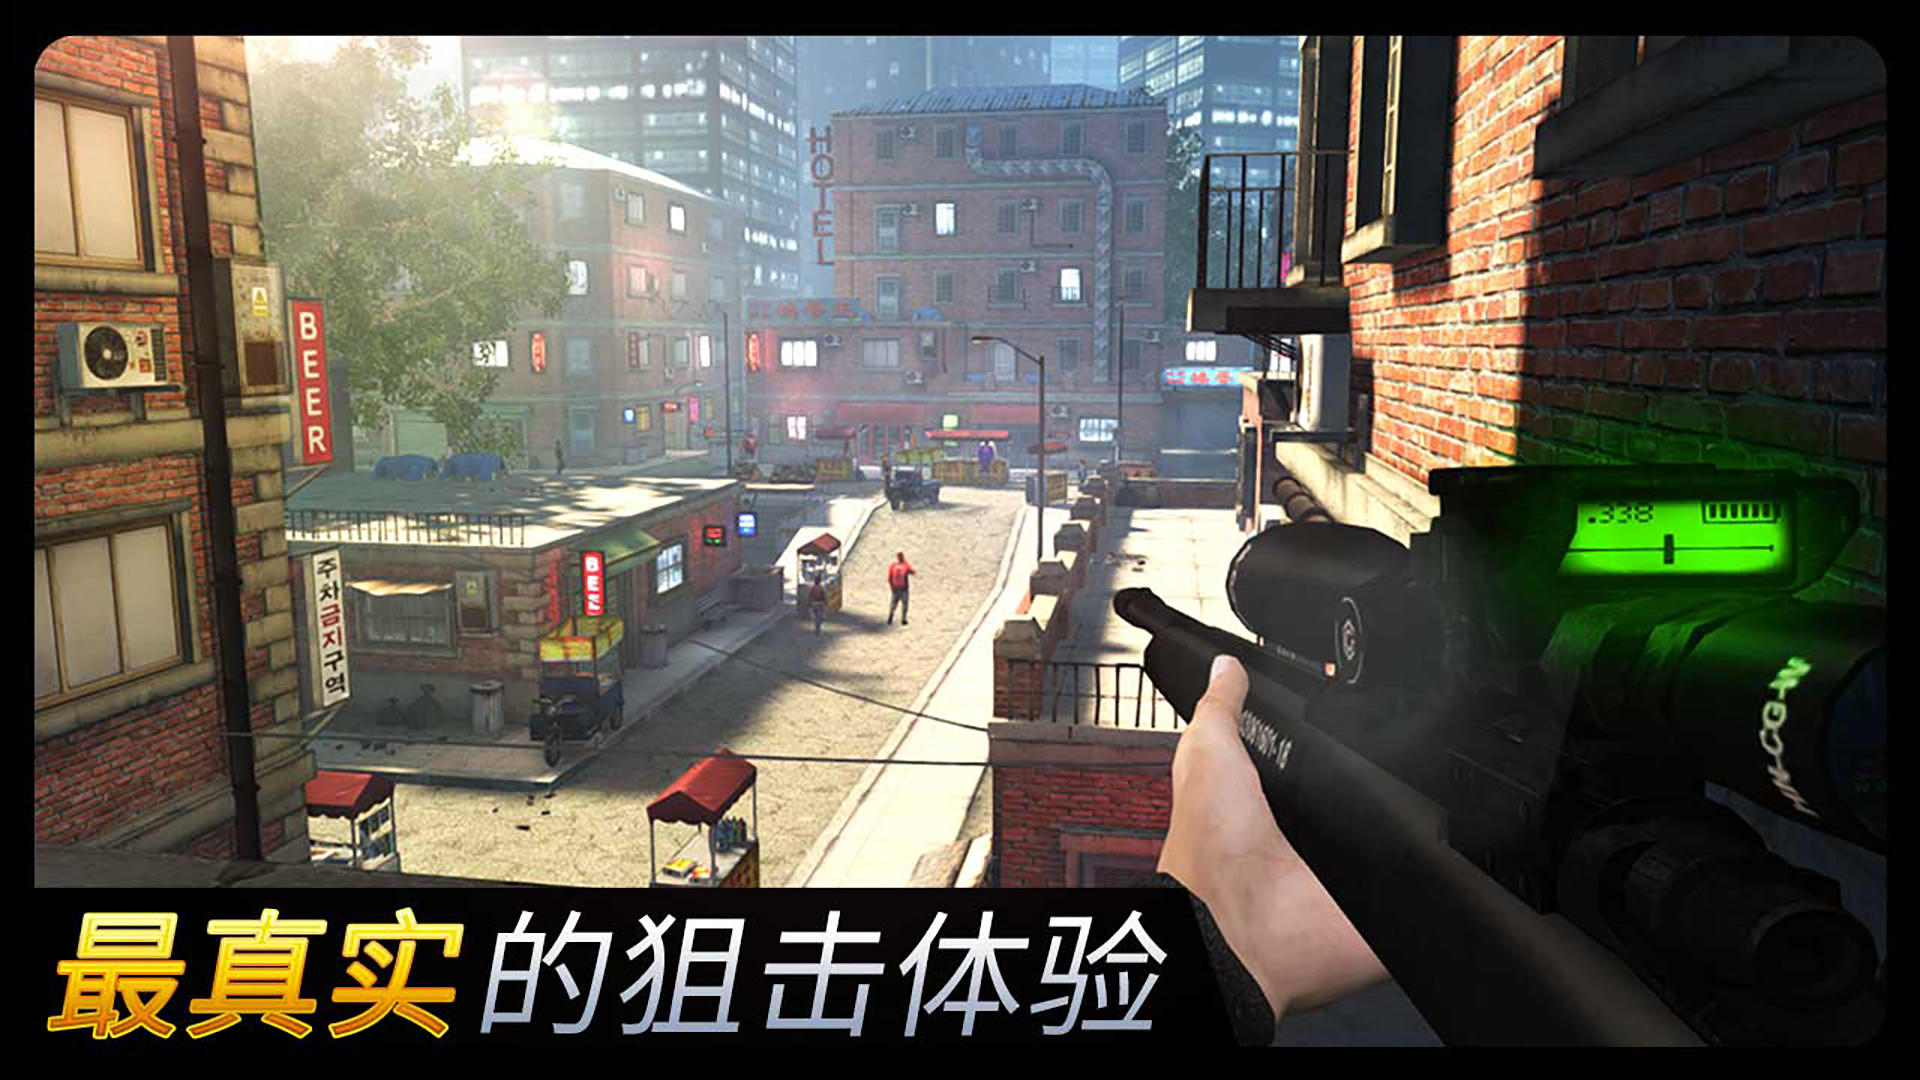 Screenshot 1 of Qianwen အချိန်နှင့်နေရာ 2.0.4.404.401.0623